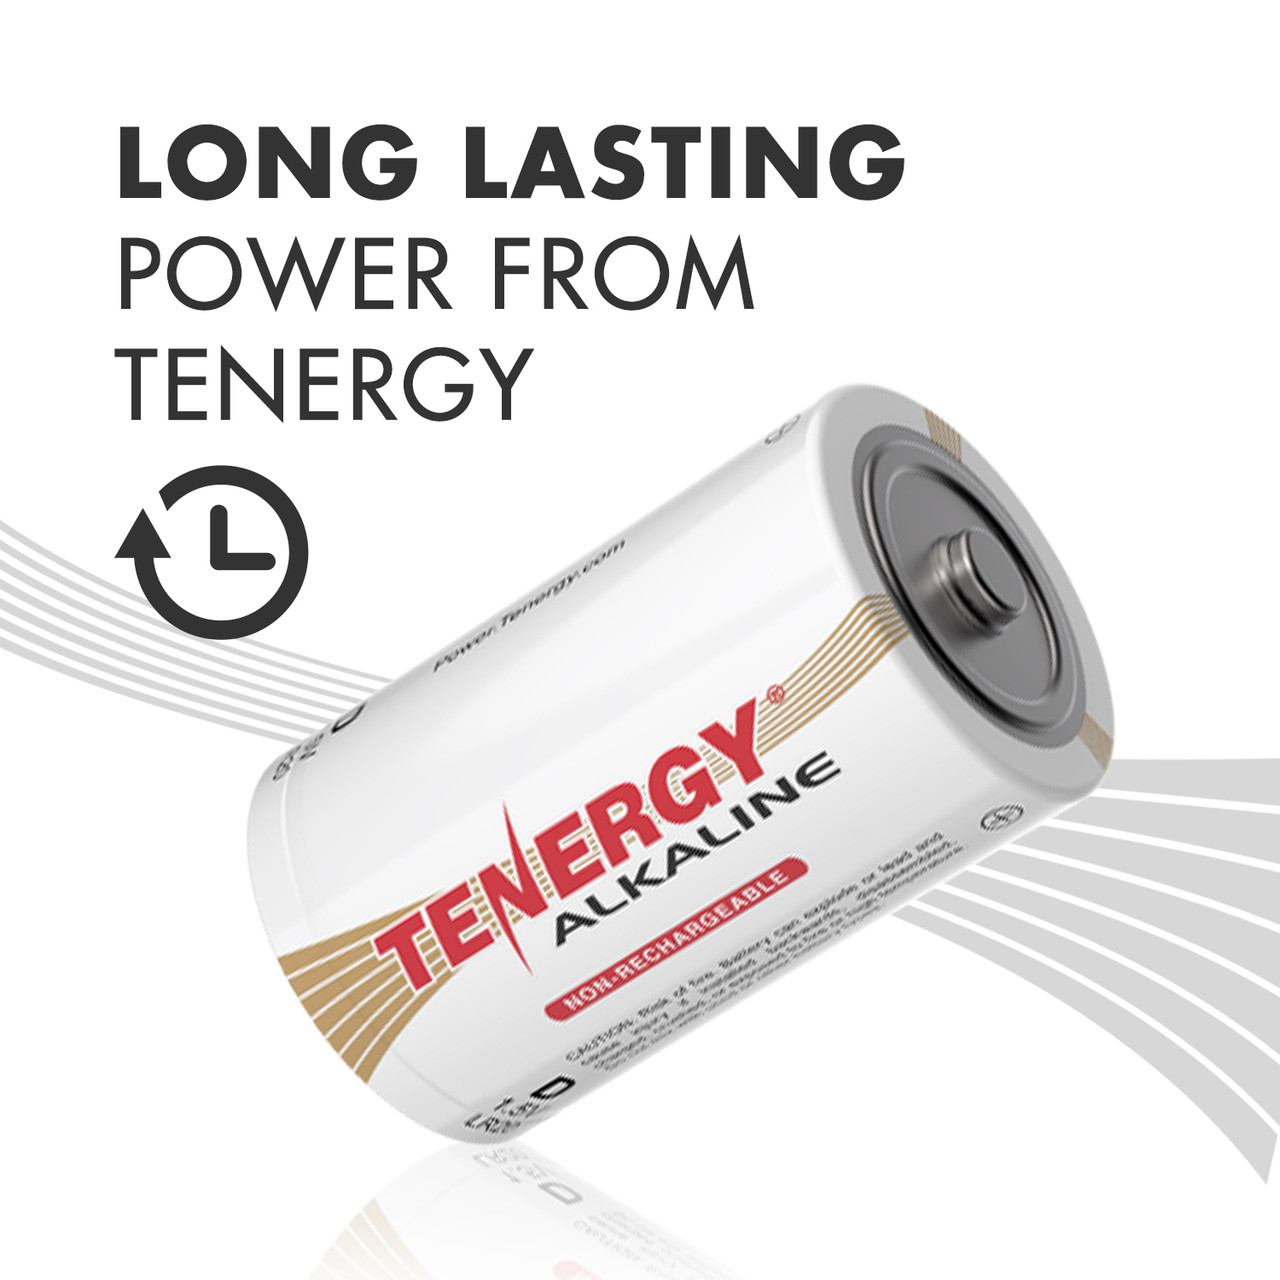 Tenergy D (LR20) Alkaline Batteries, 24pk - Tenergy